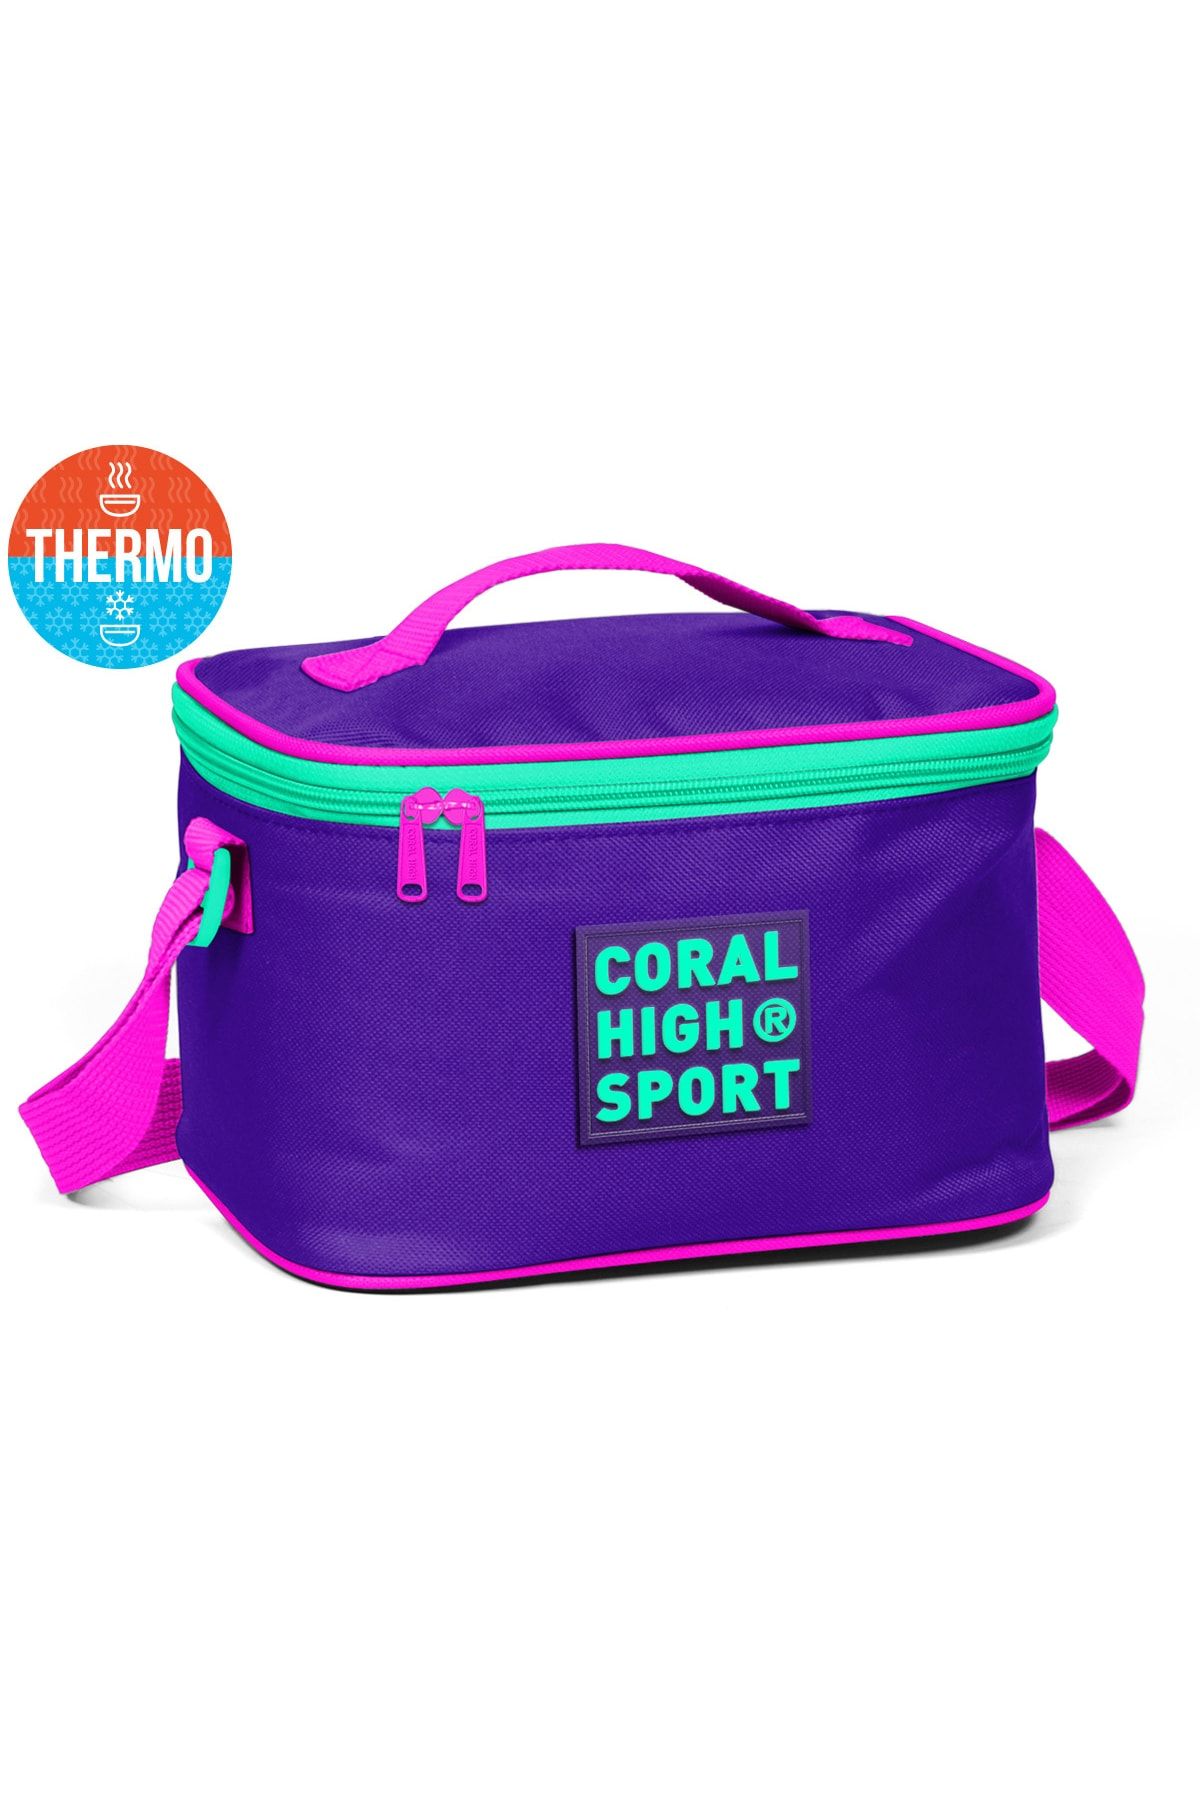 Coral High Sport Thermo Beslenme Çantası